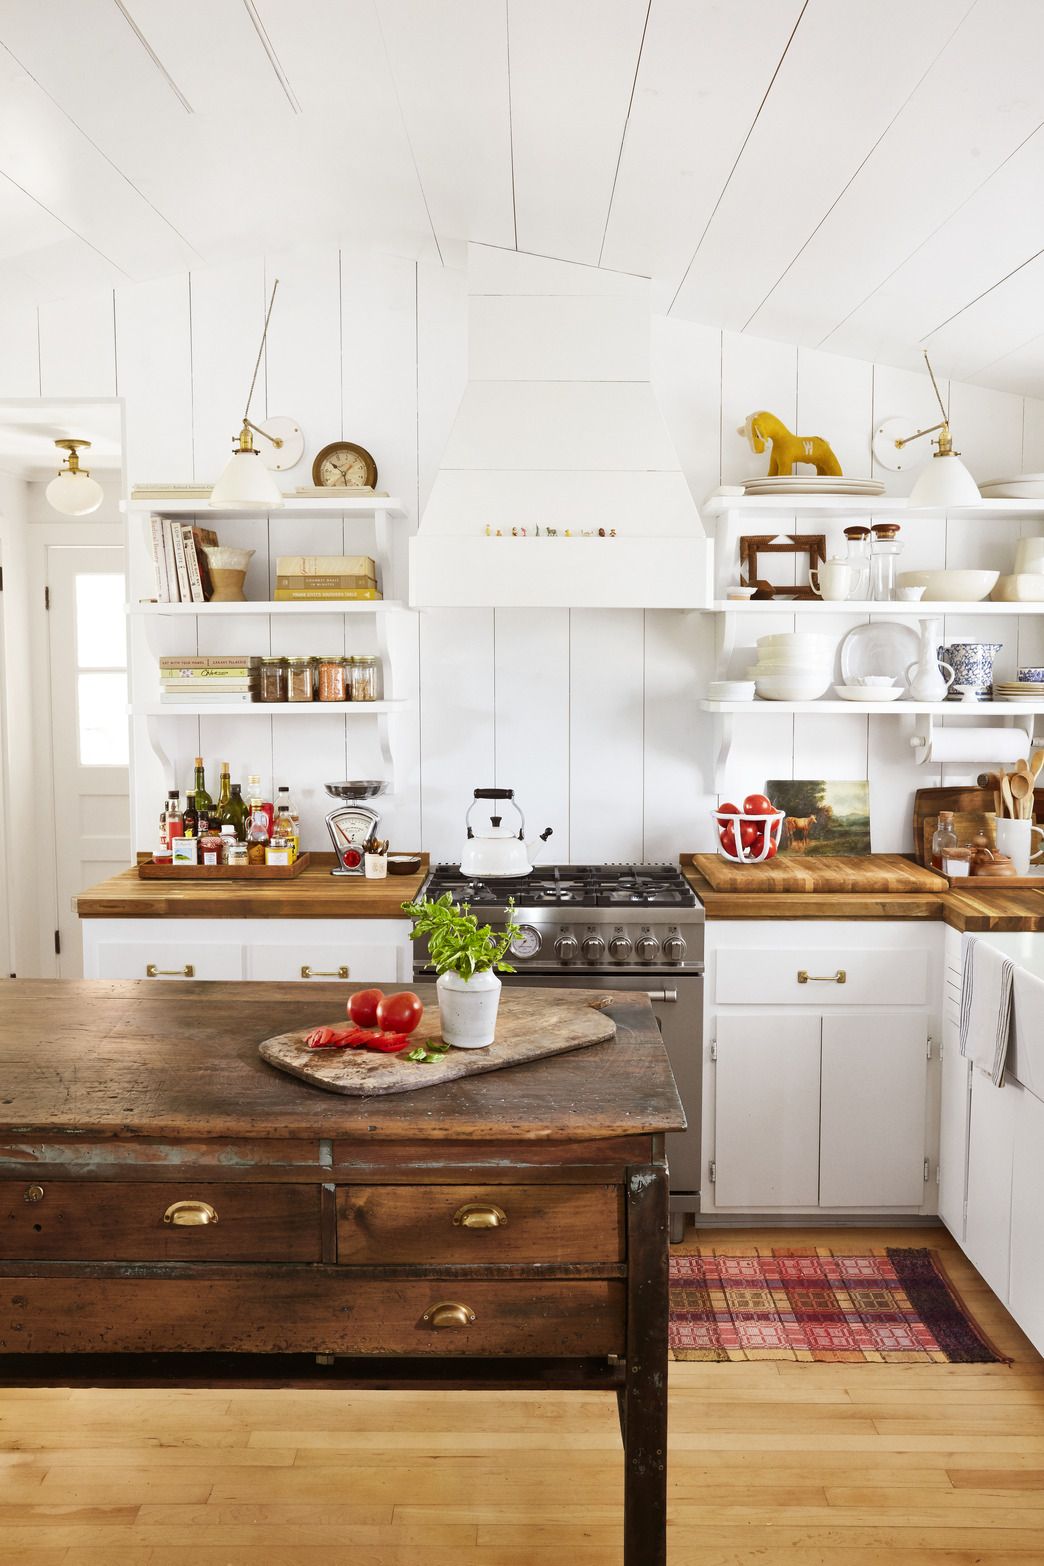 20 Best Kitchen Design Ideas   Pictures of Country Kitchen Decor